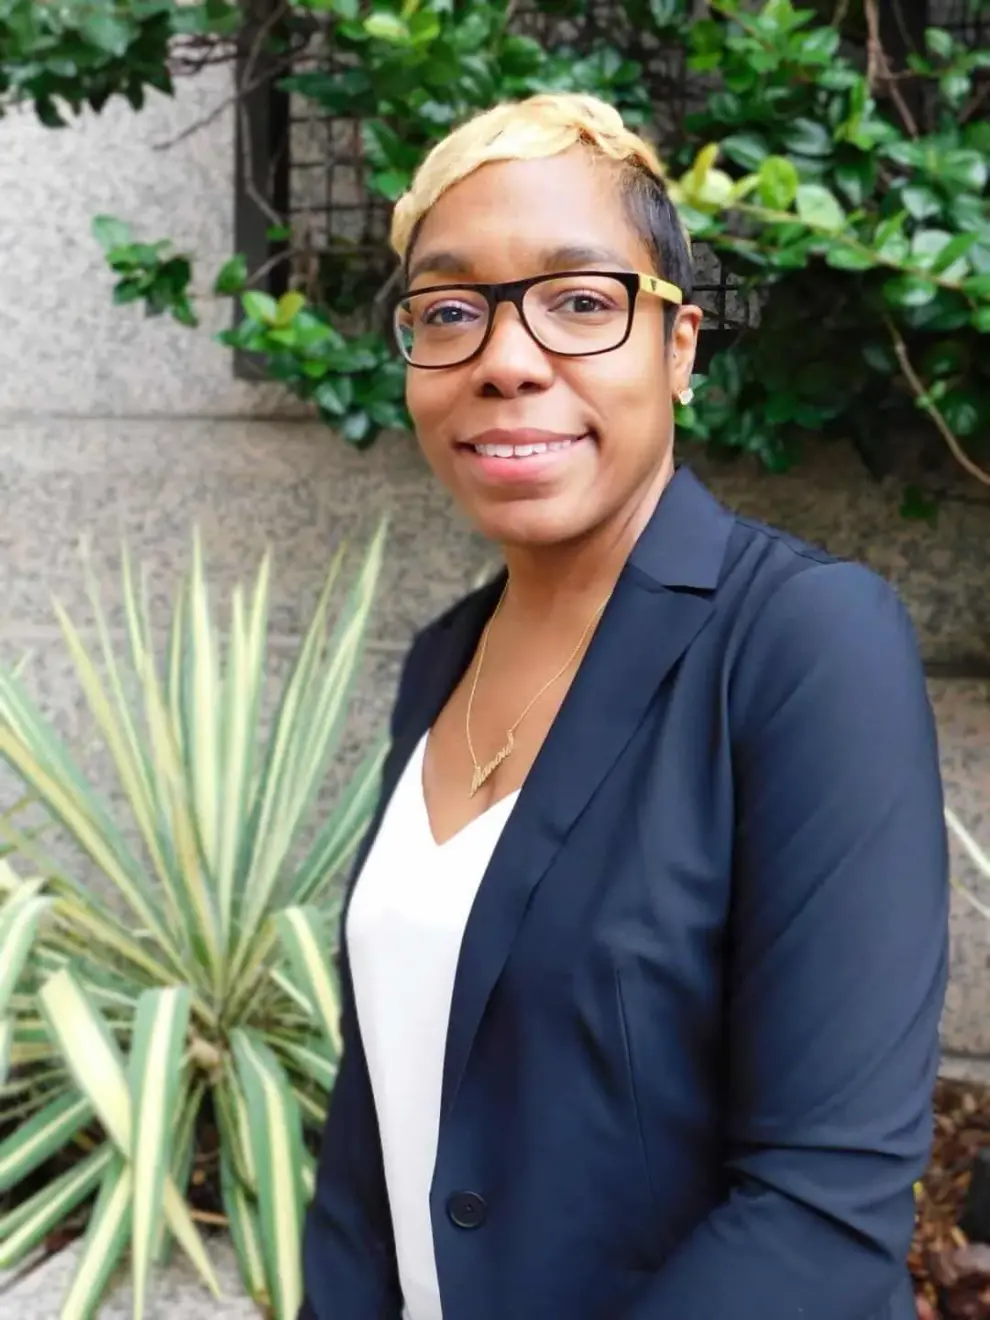 HNTB names Emmanuella Myrthil as Diversity Program Director in the Southeast